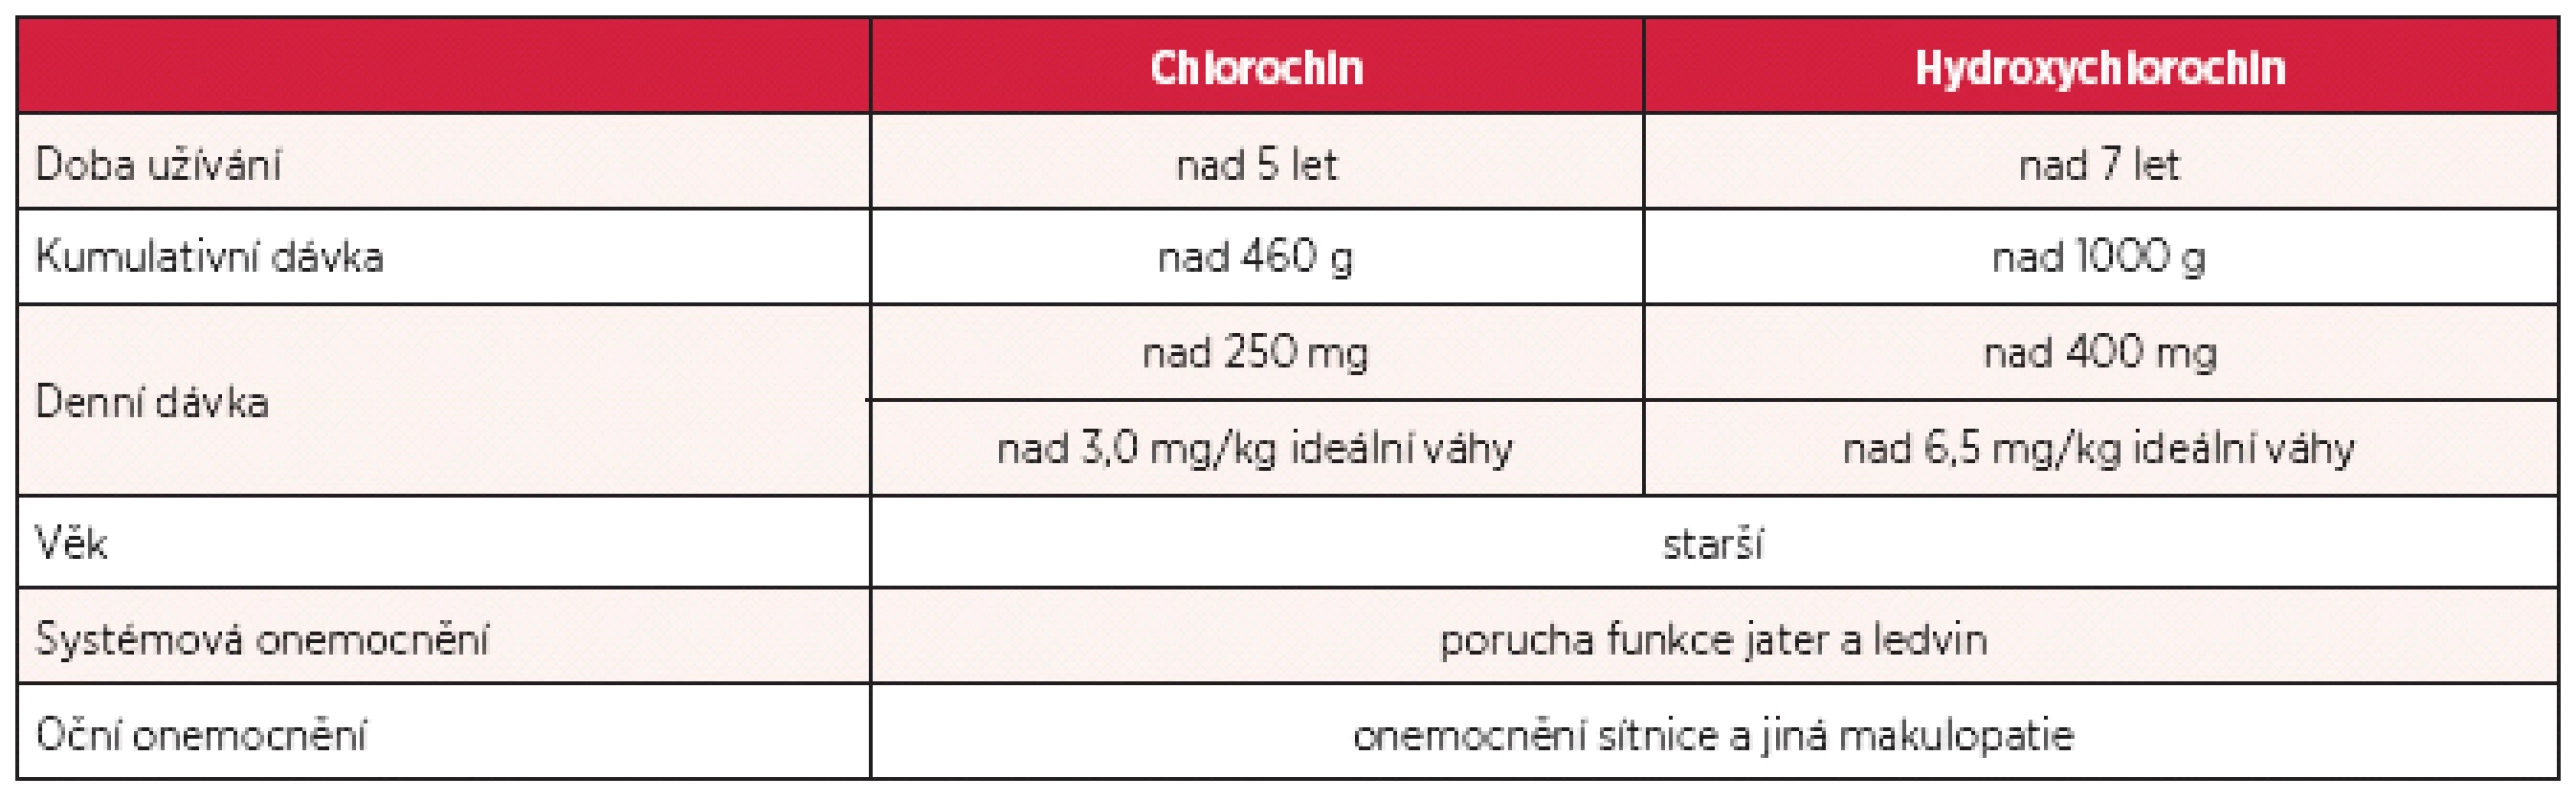 Rizikové faktory pro vznik chlorochinové a hydroxychlorochinové retinopatie